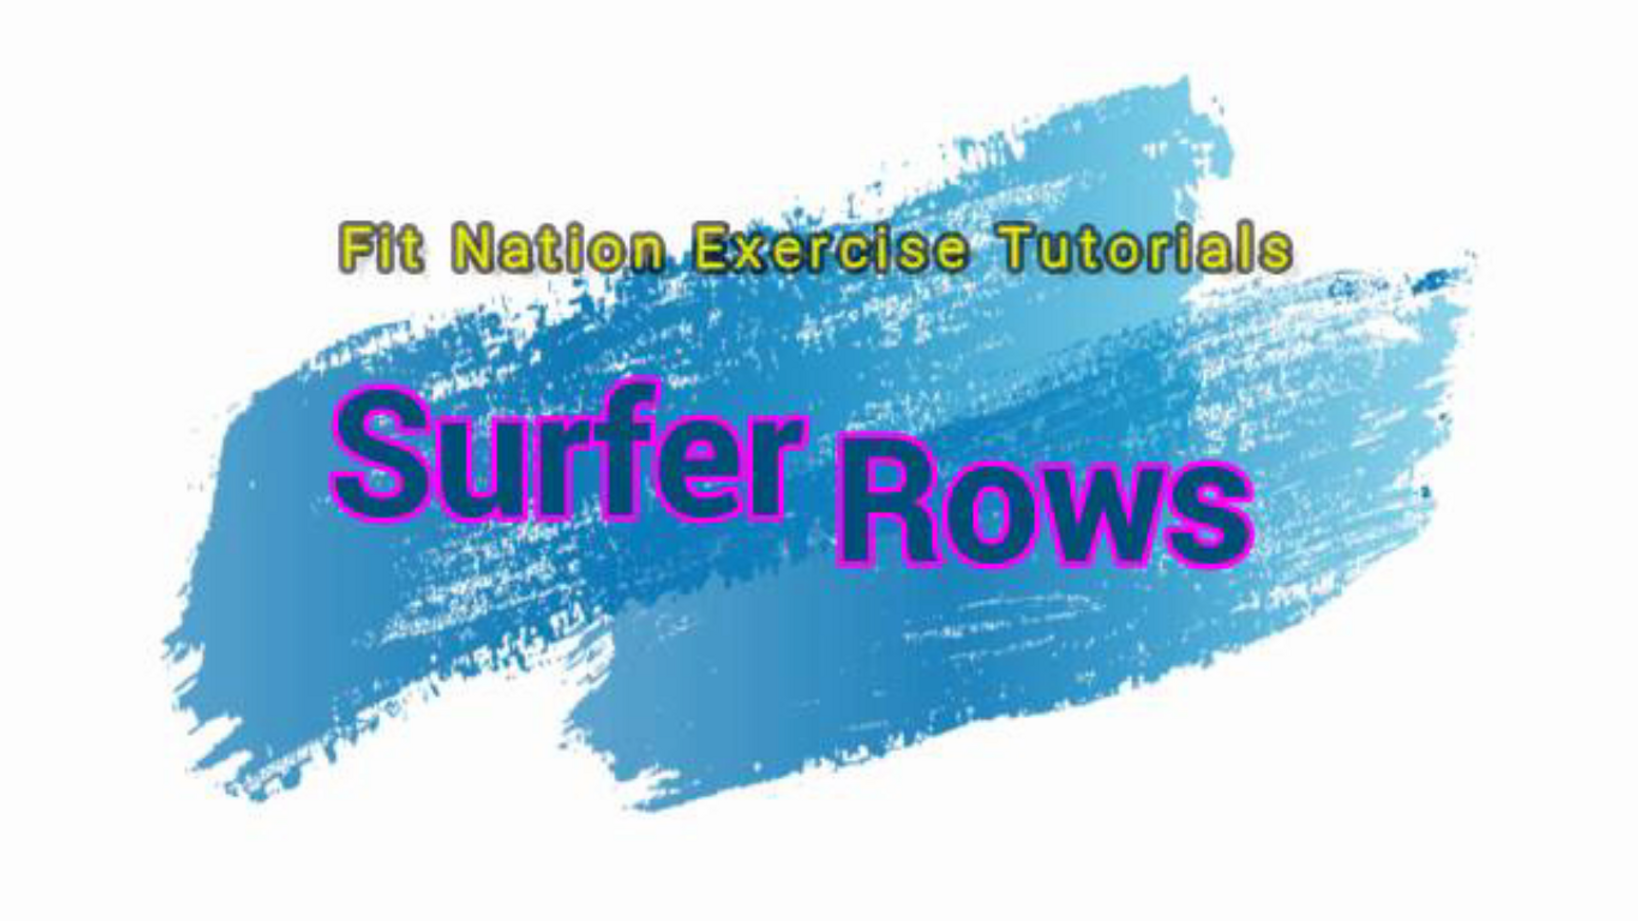 Tutorial - Surfer Rows